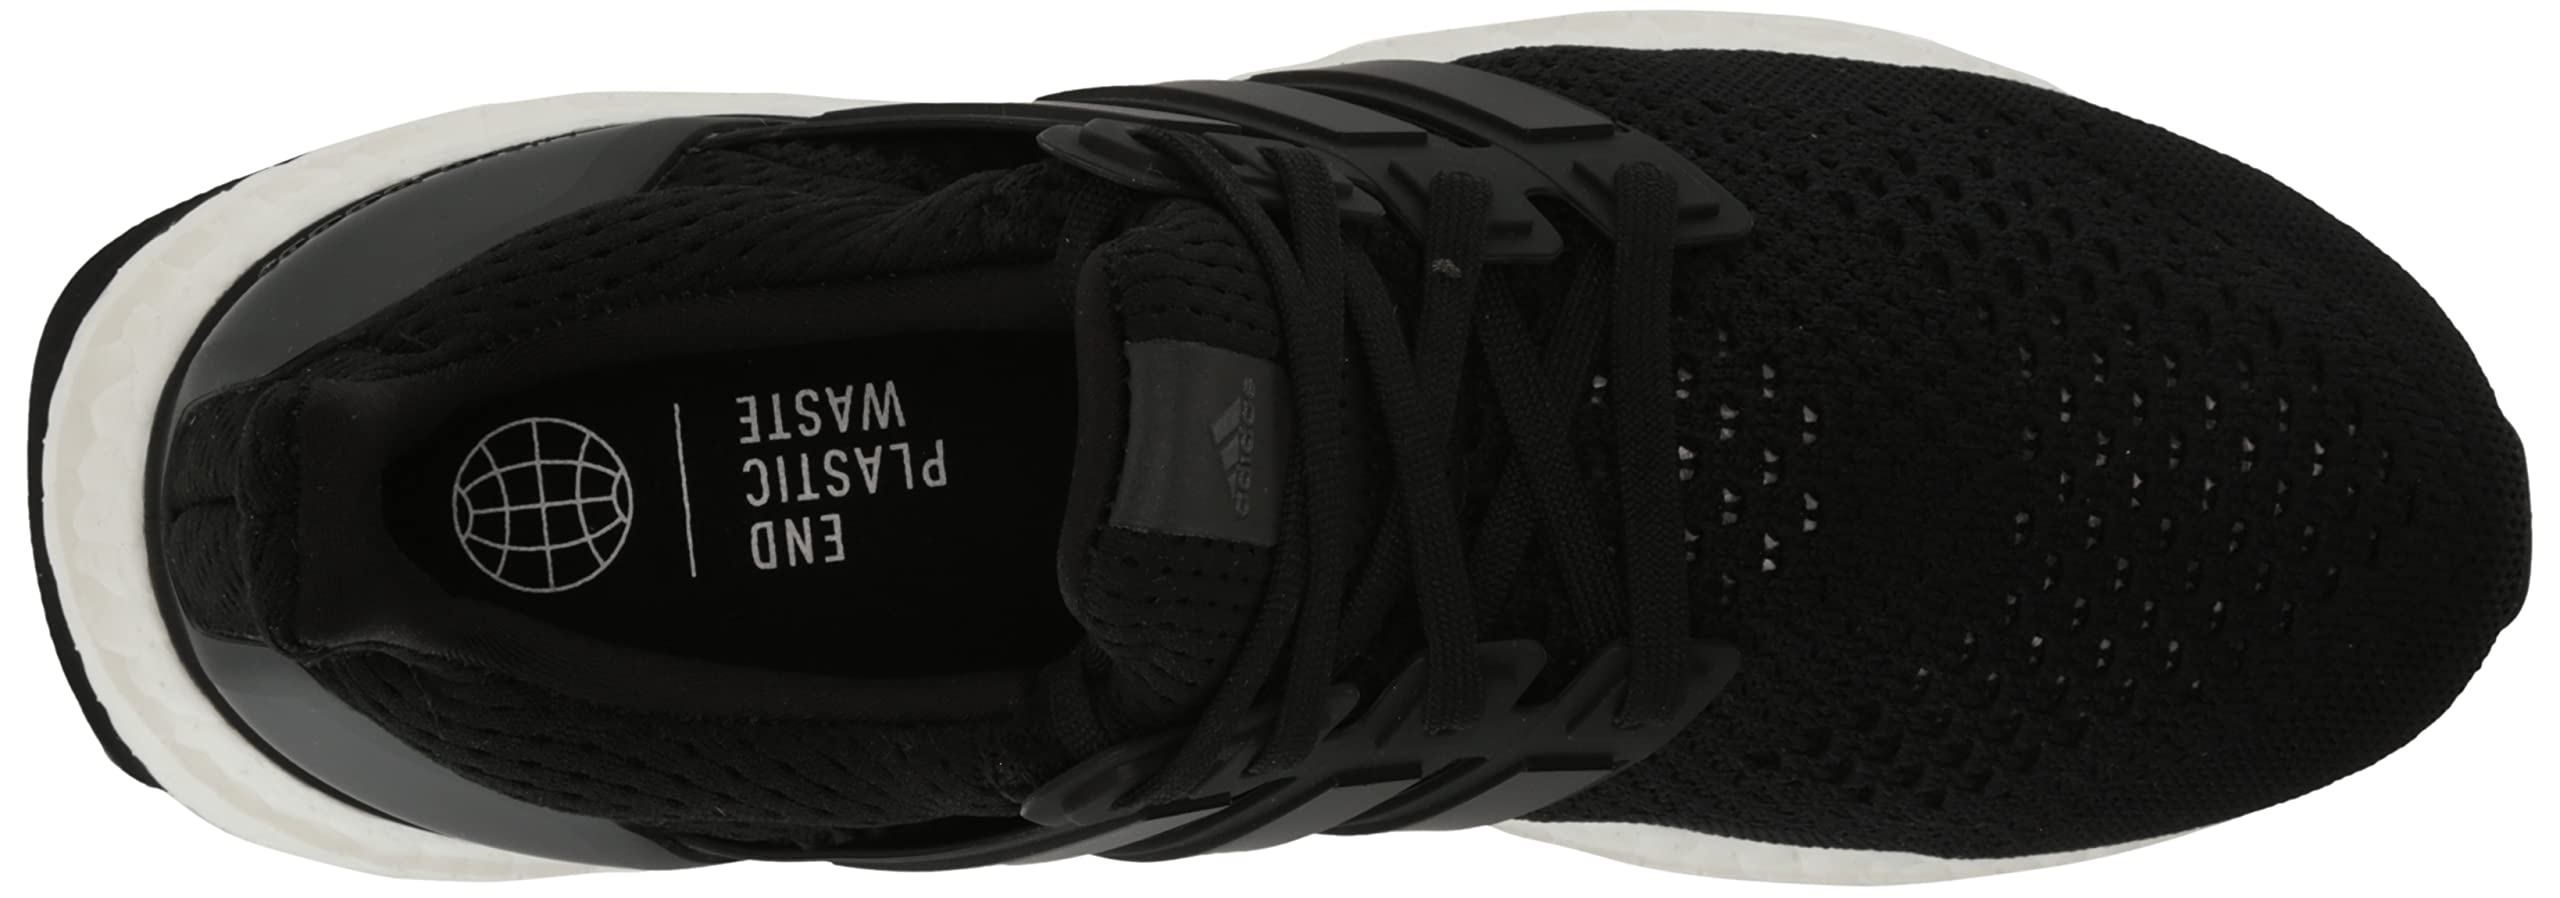 adidas Ultraboost 1.0 Running Shoe, Black/Black/Beam Green, 6.5 US Unisex Big Kid